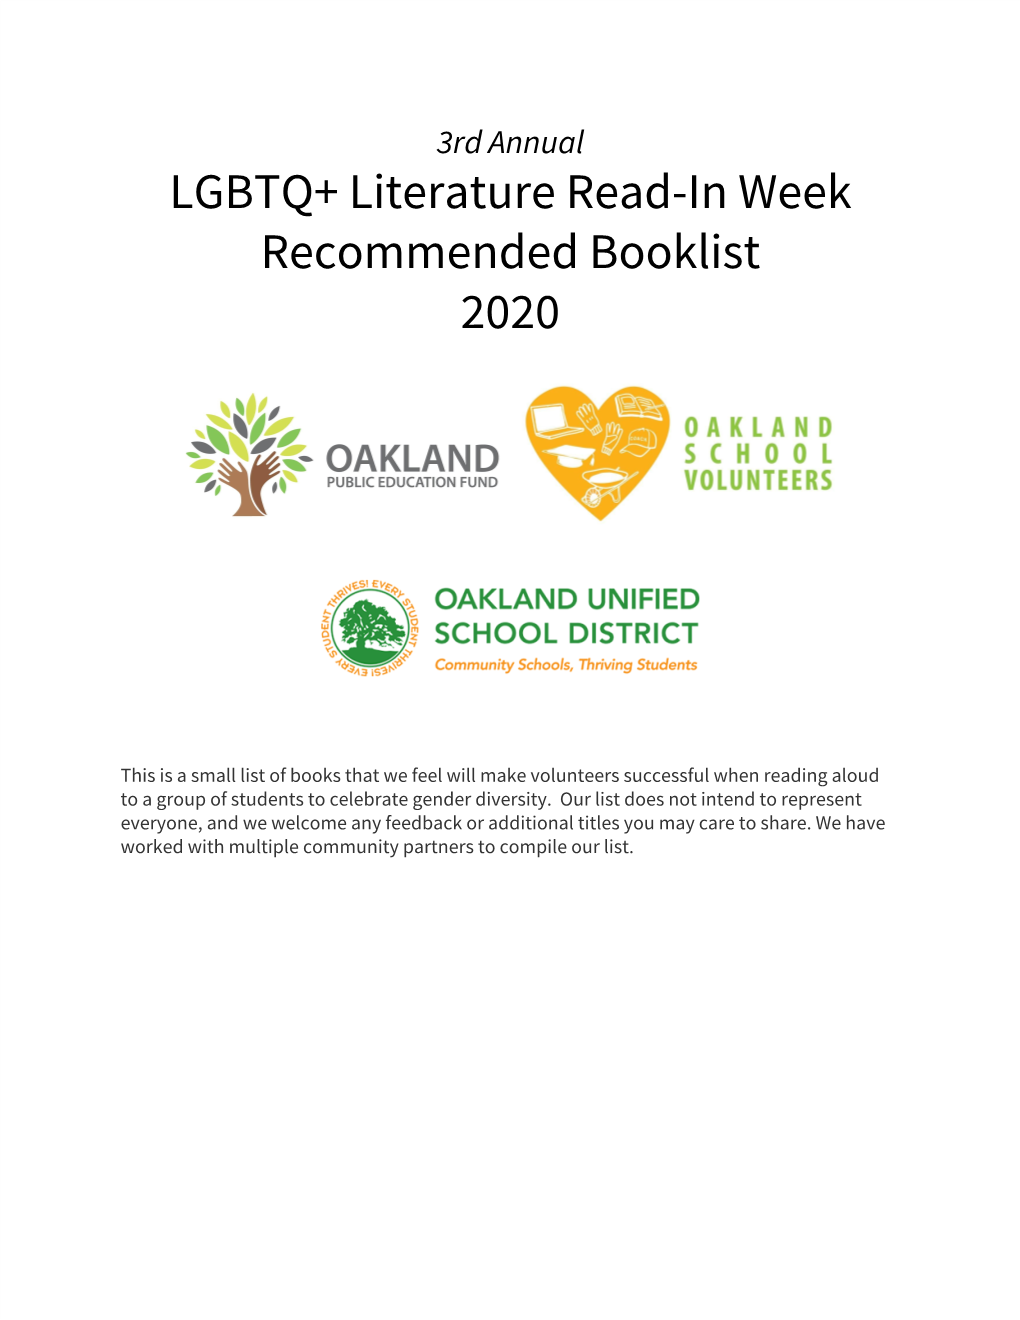 LGBTQ+ Literature Read-In Week Recommended Booklist 2020